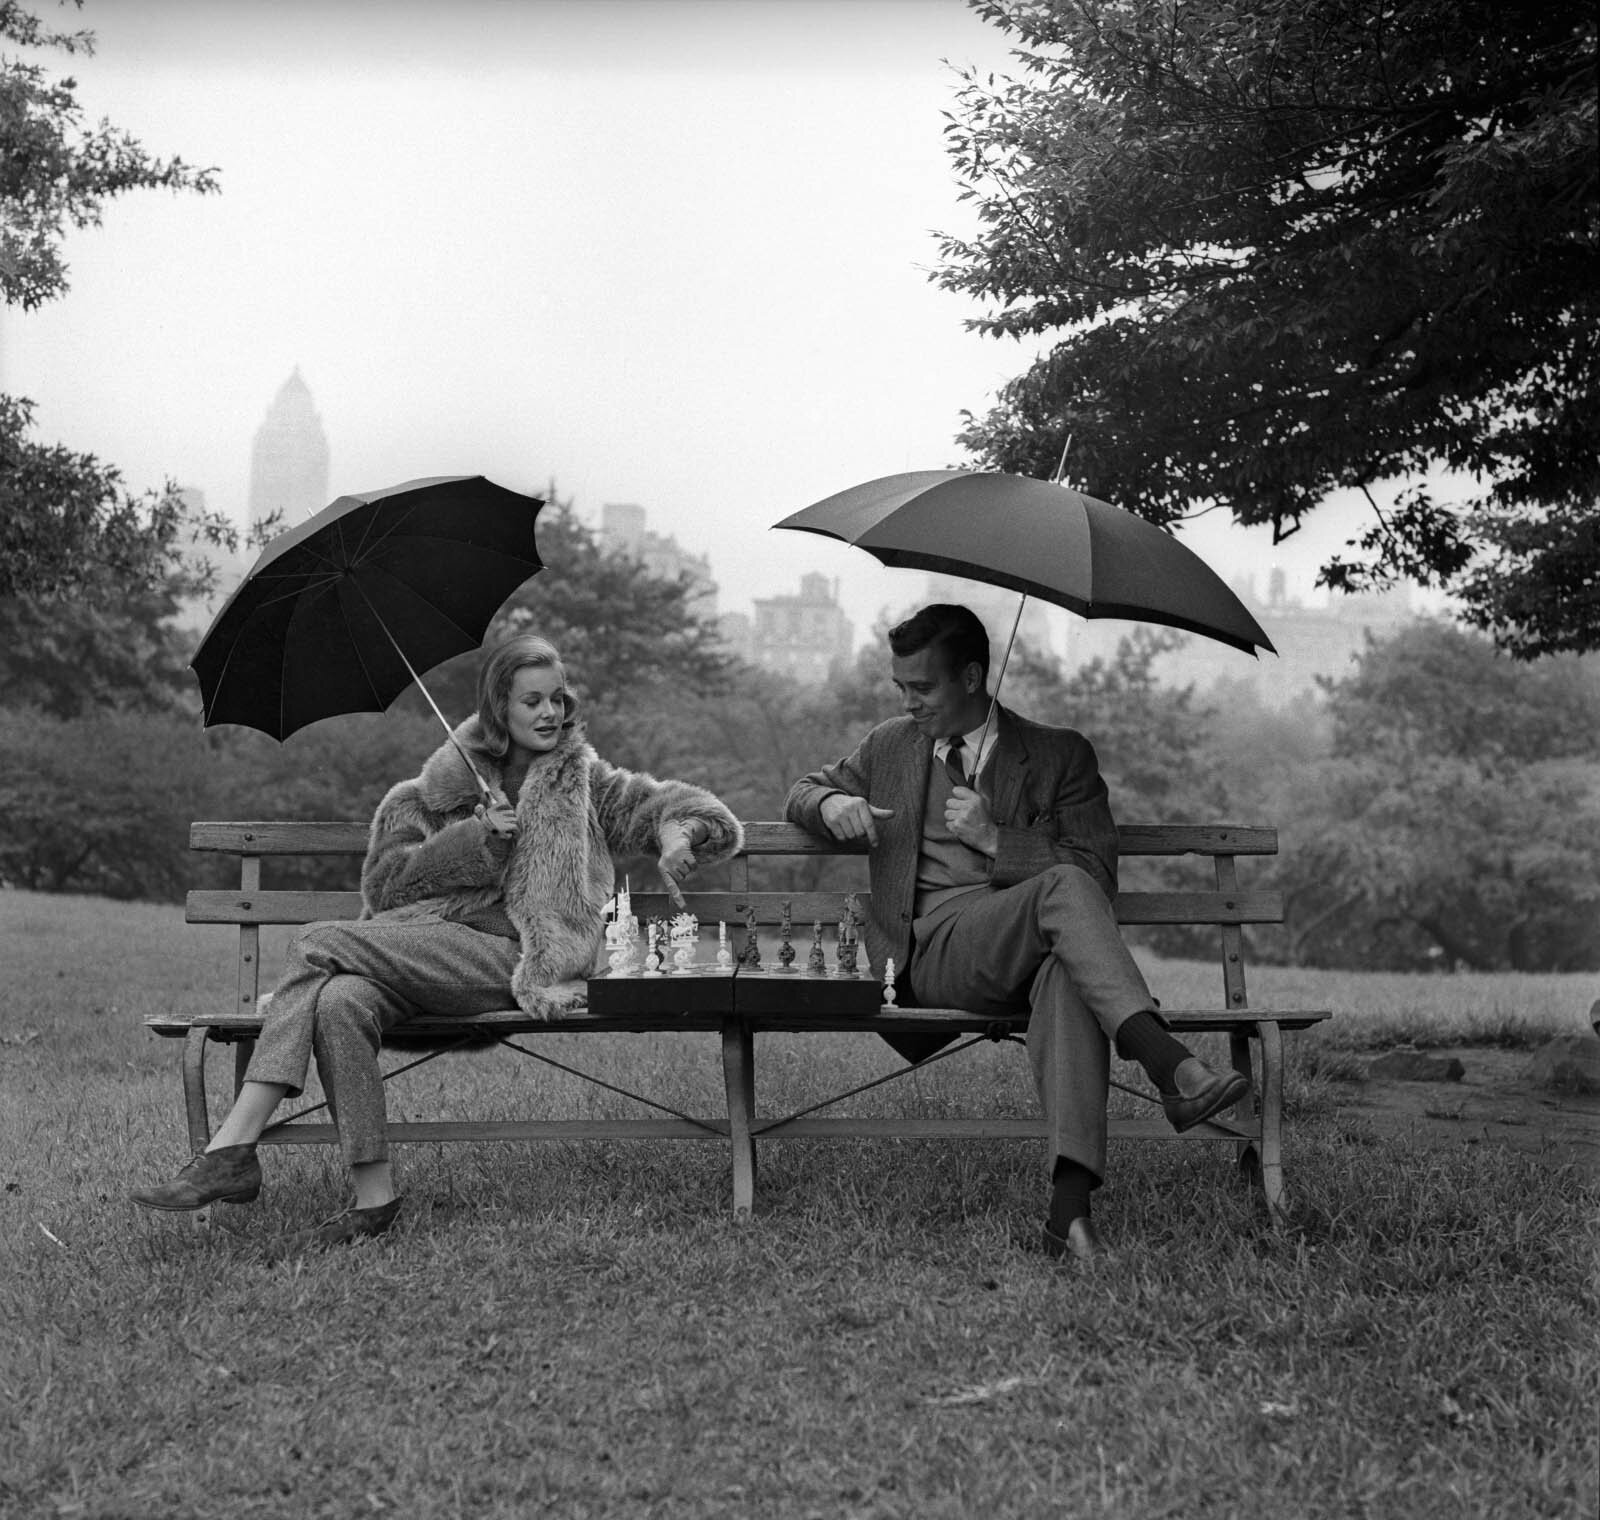 Monique Le Fevre and Unidentified Man, New York, 1958. Photo by Jerry Schatzberg.